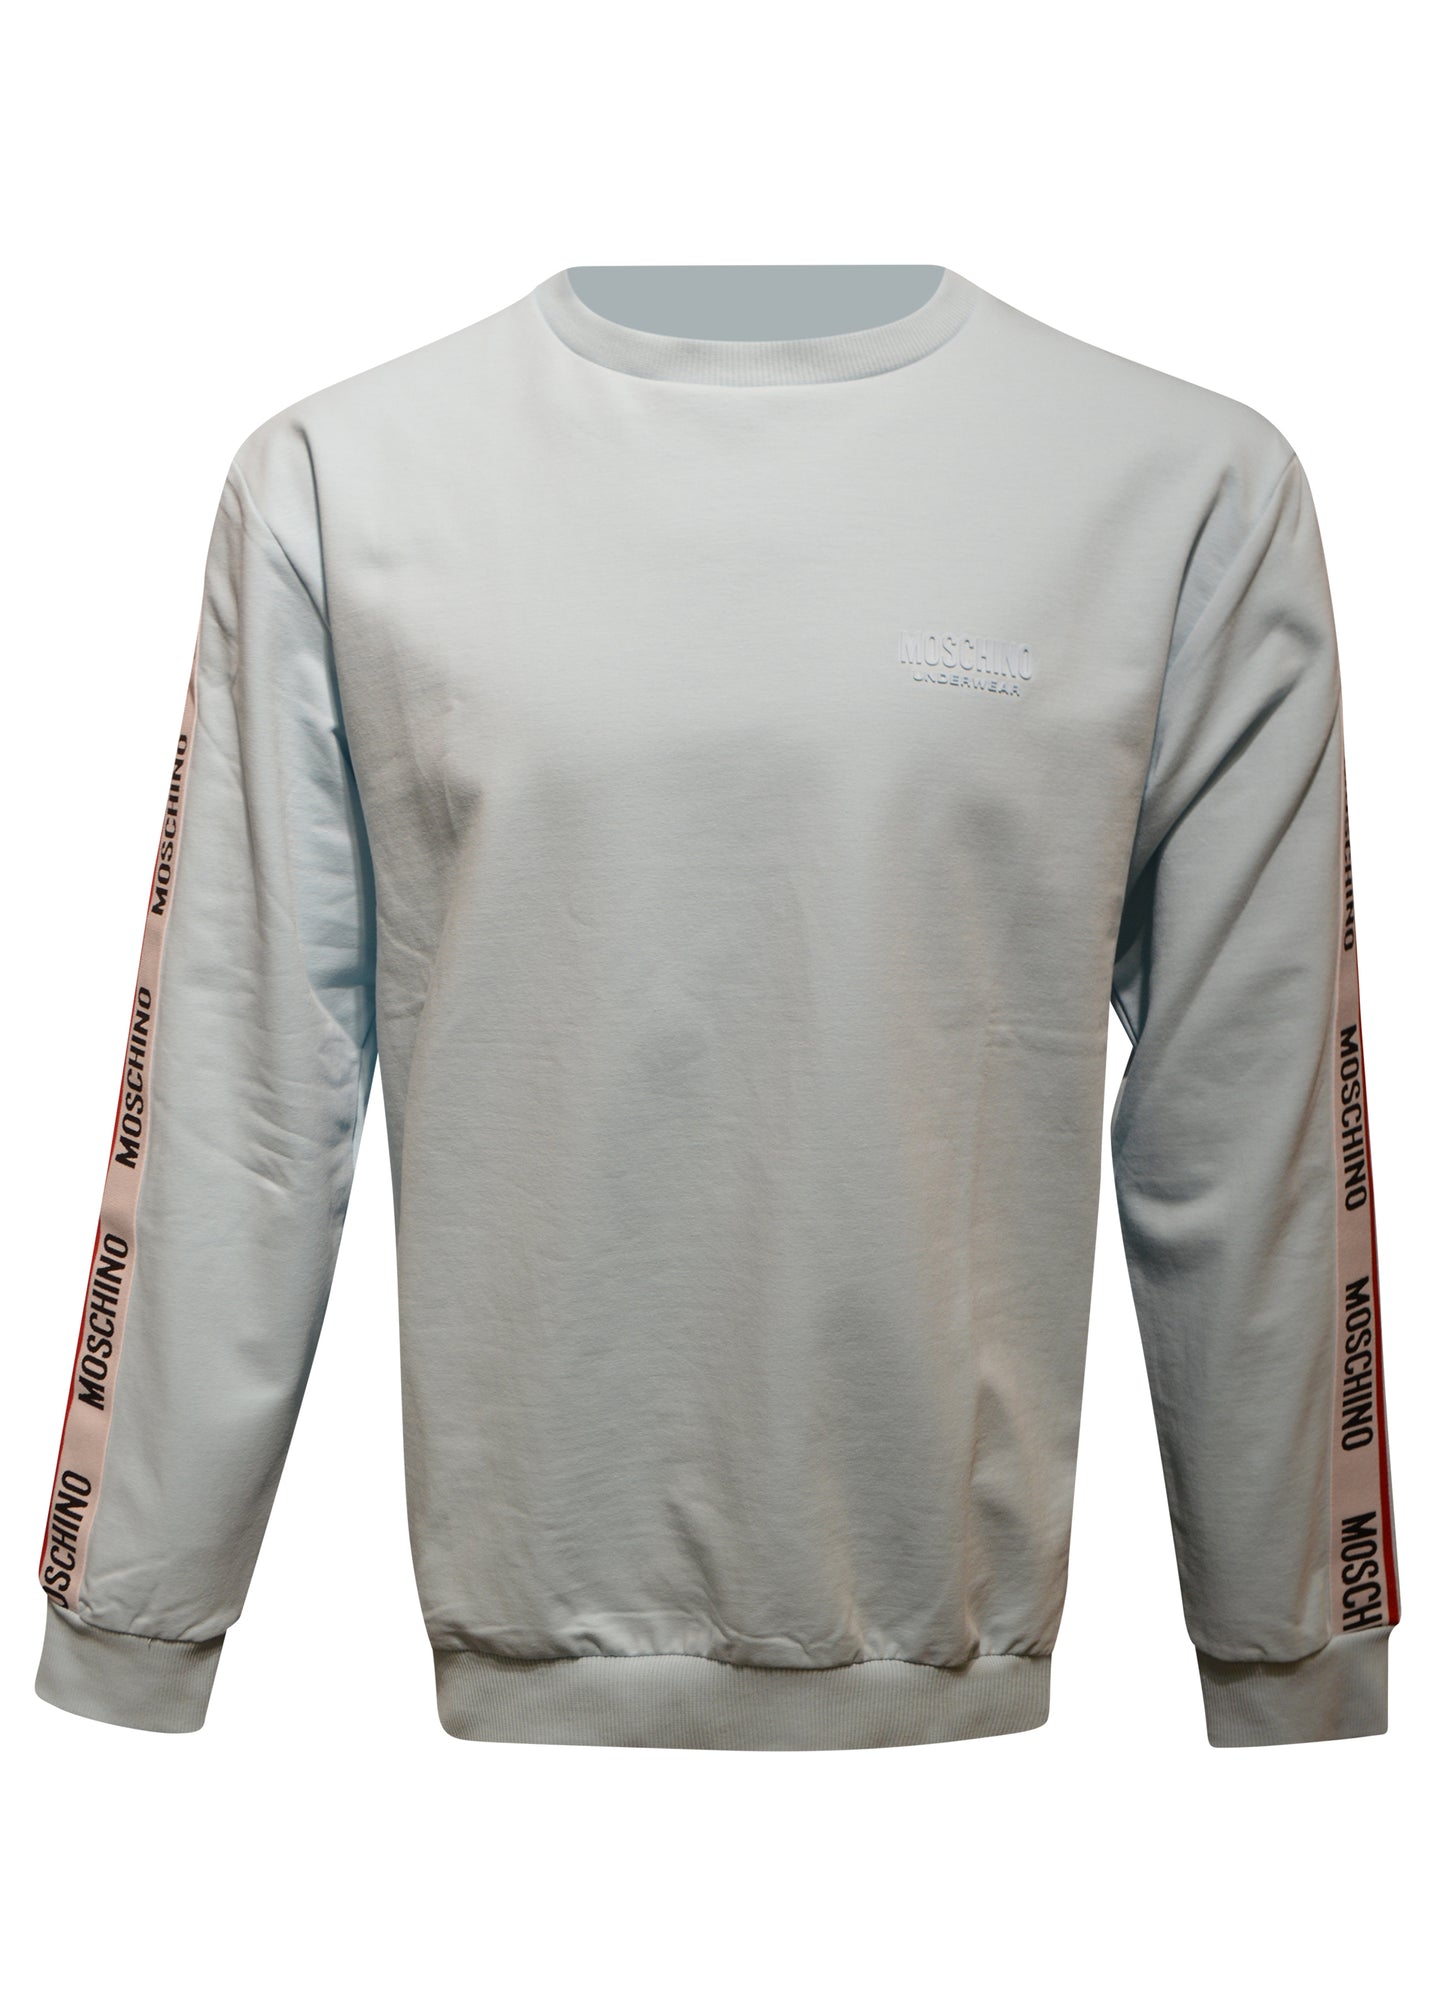 Moschino - Crewneck Tape Sleeve Detail Sweatshirt - 400121 - Sky